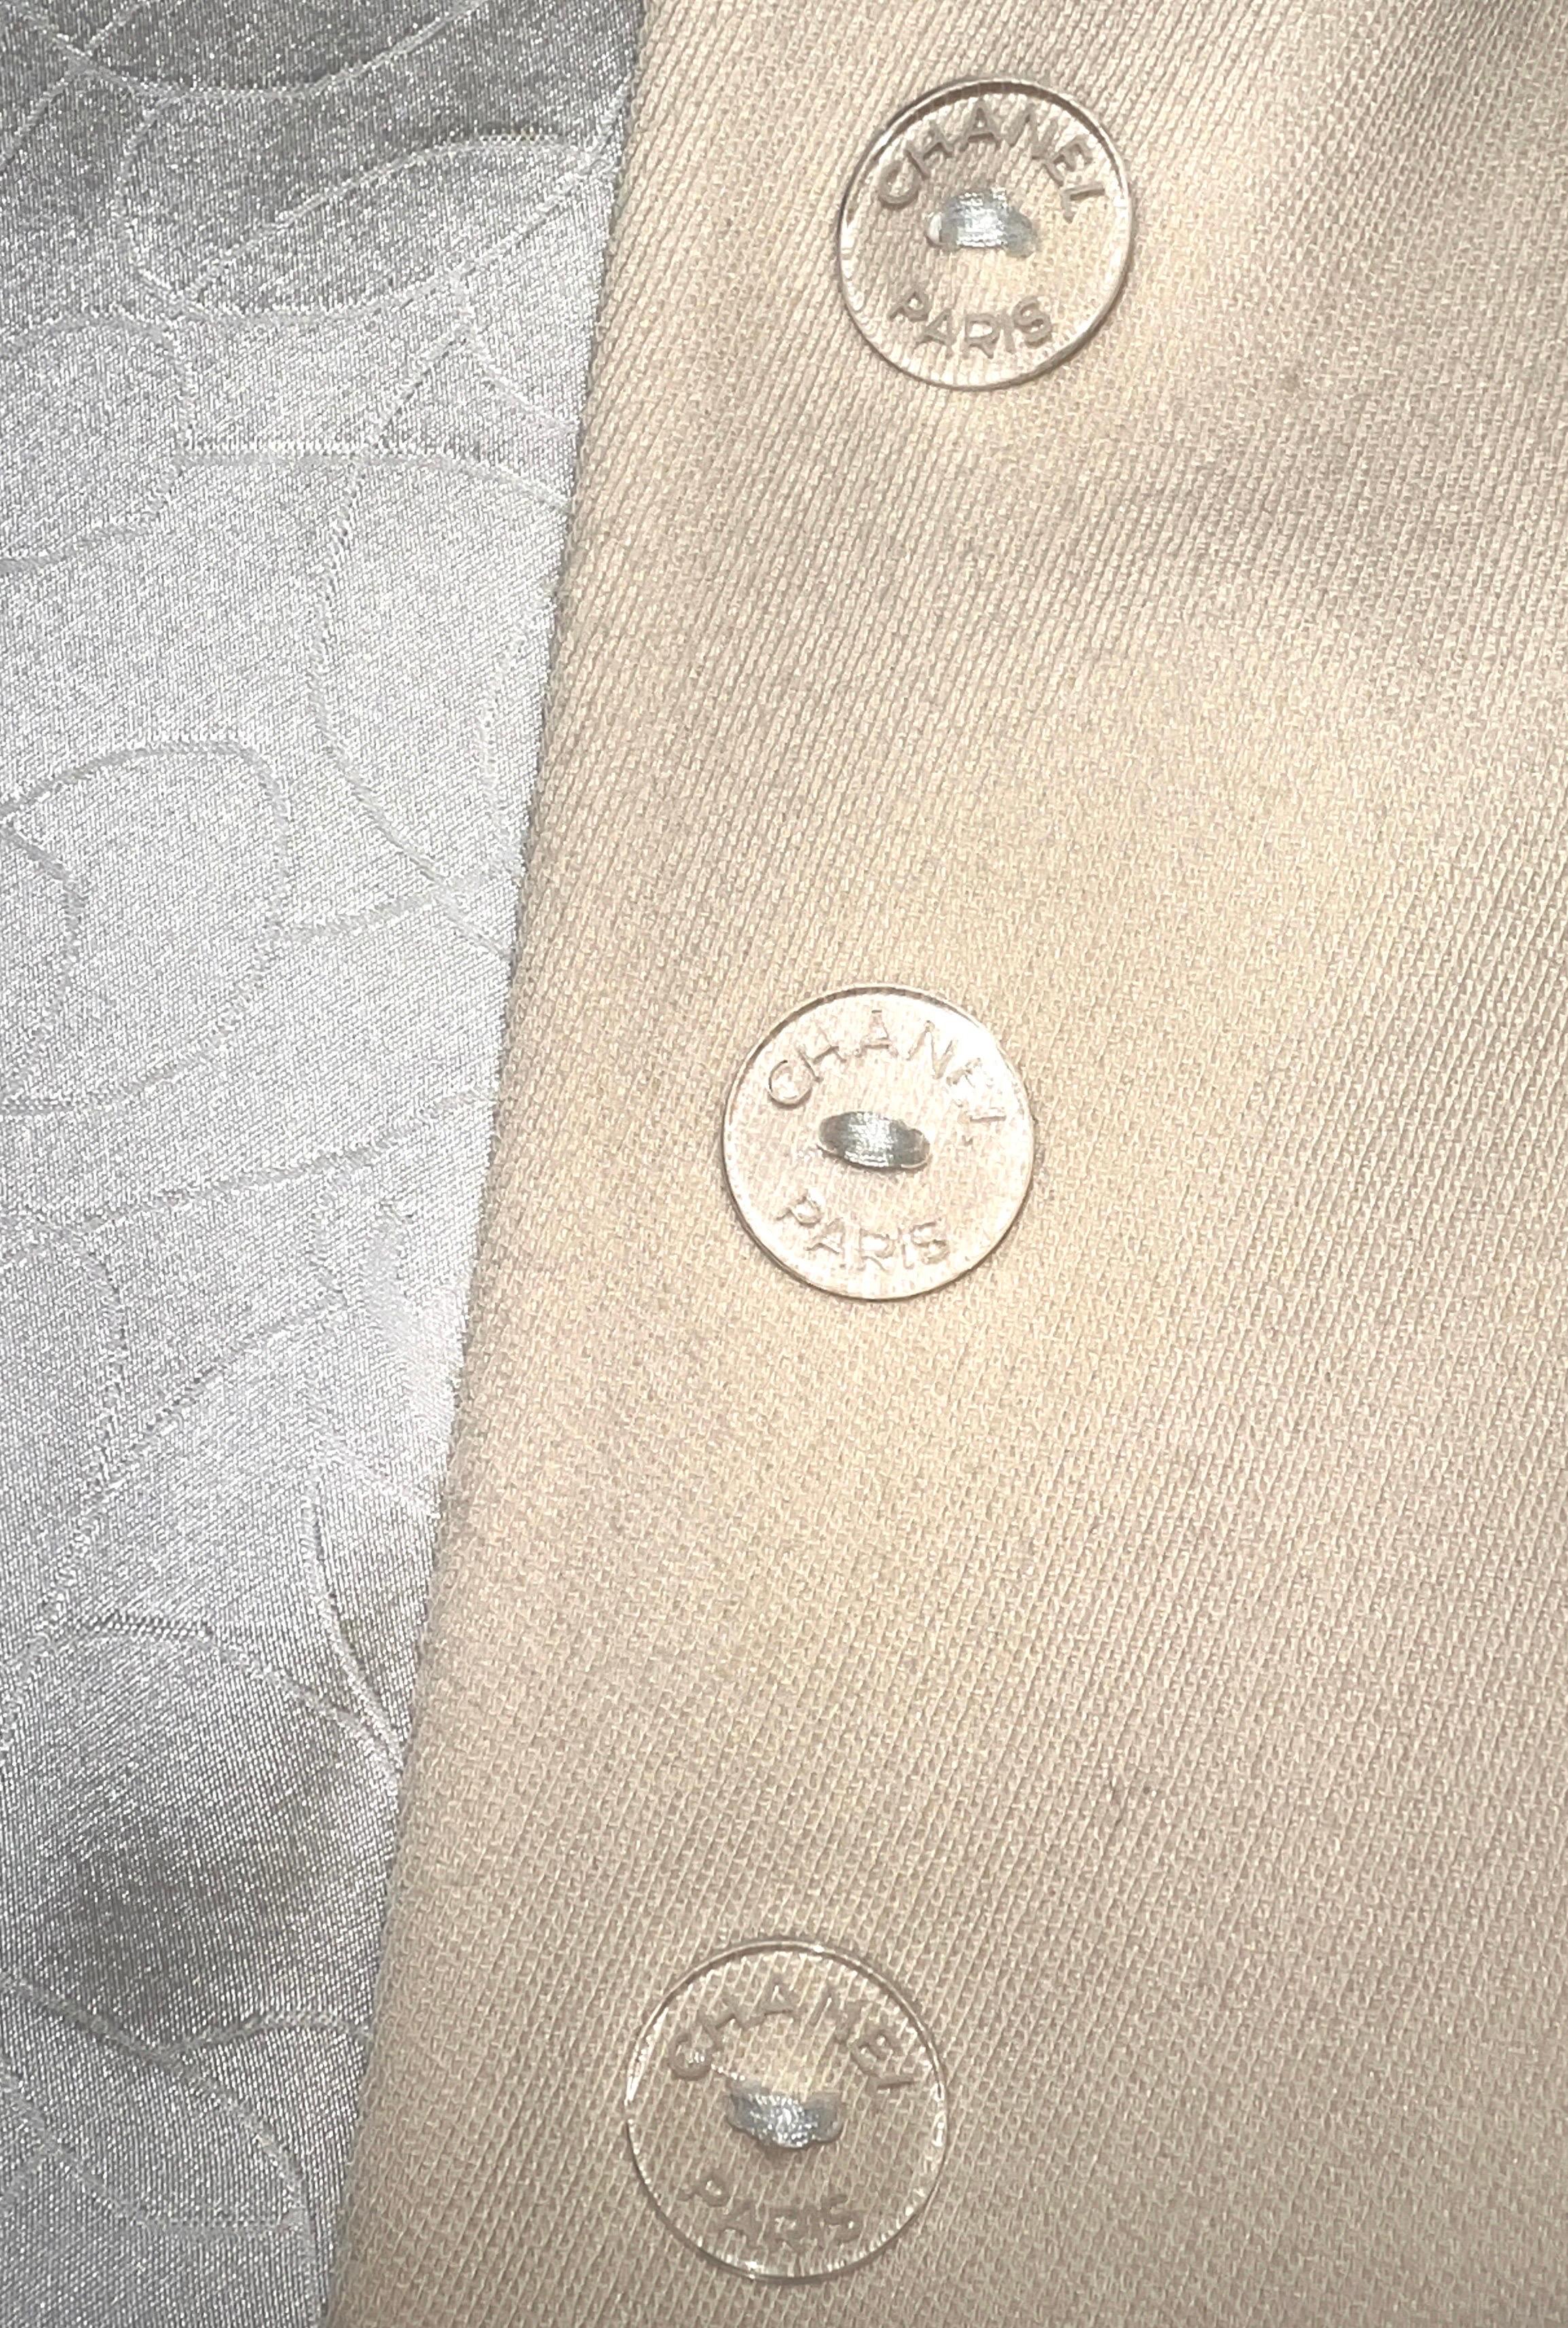 CHANEL Signature Monochrome Bi-Color Tweed Jacket Blazer 38 For Sale 2